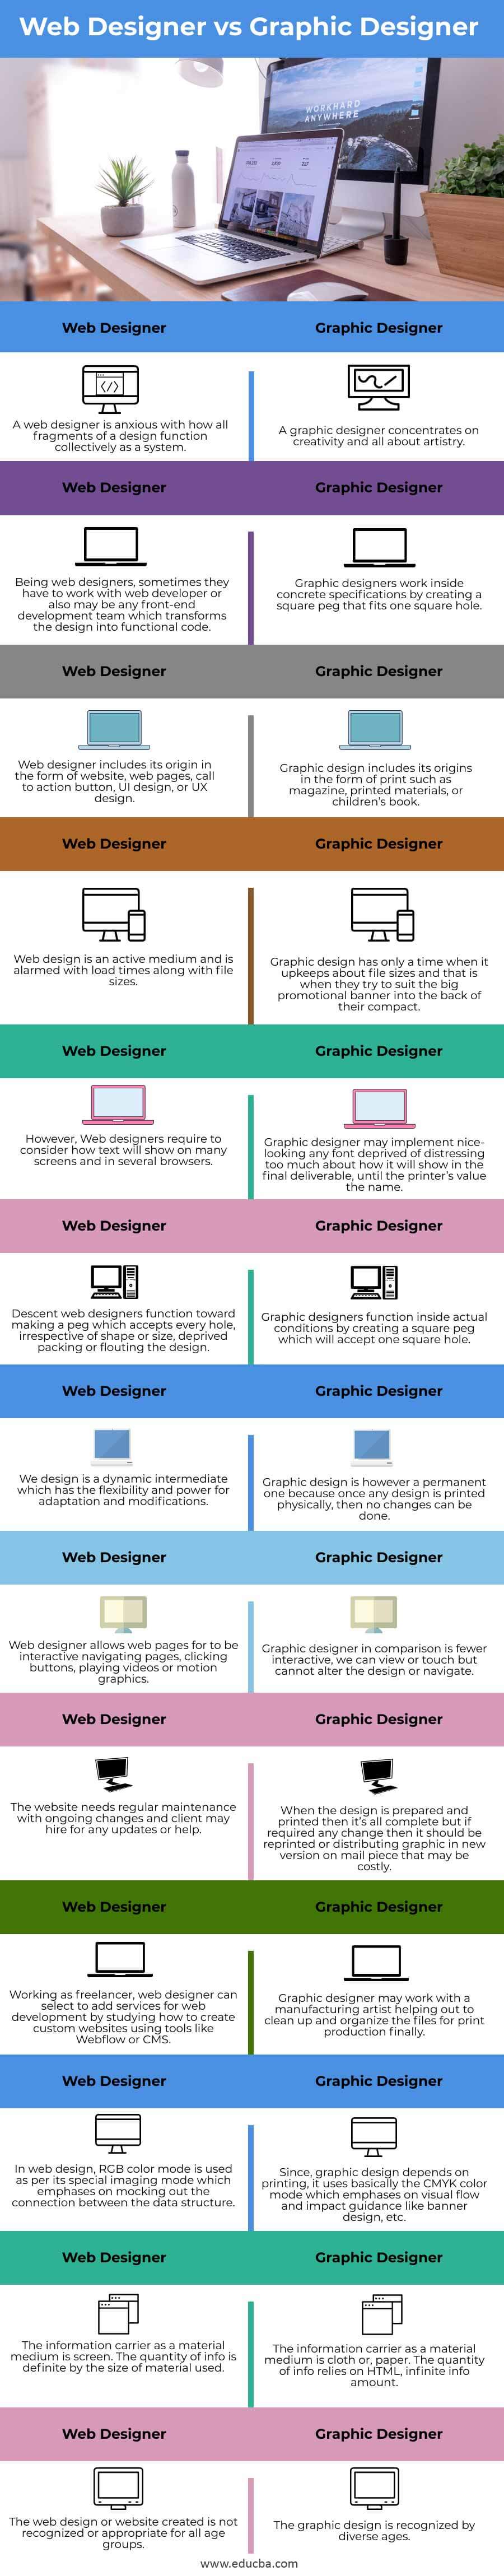 Web-Designer-vs-Graphic-Designer-info